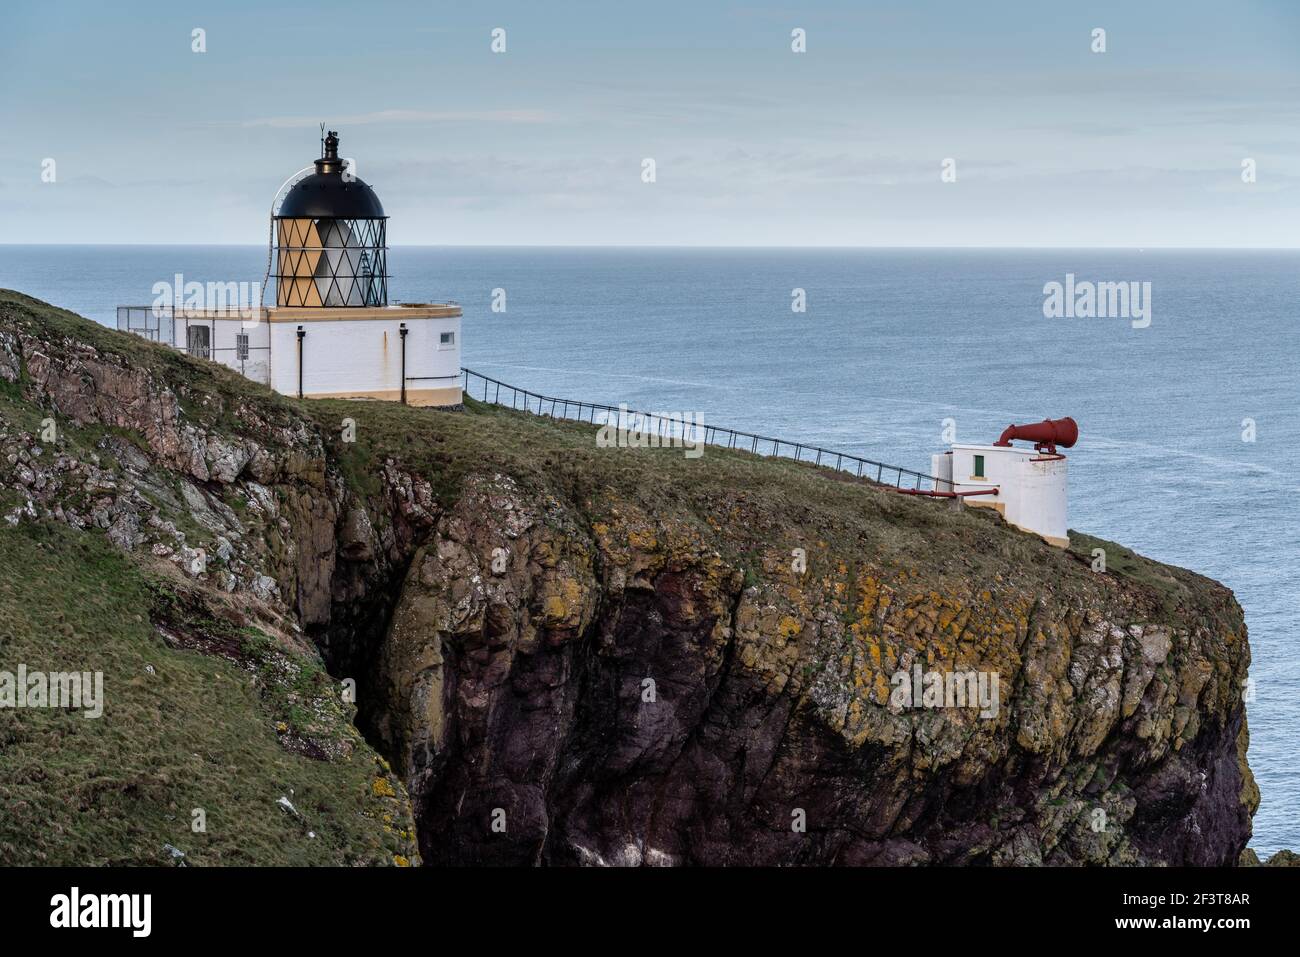 St Abbs, Berwickshire, Scotland - North Sea fishing village and nature reserve - Lighthouse Stock Photo